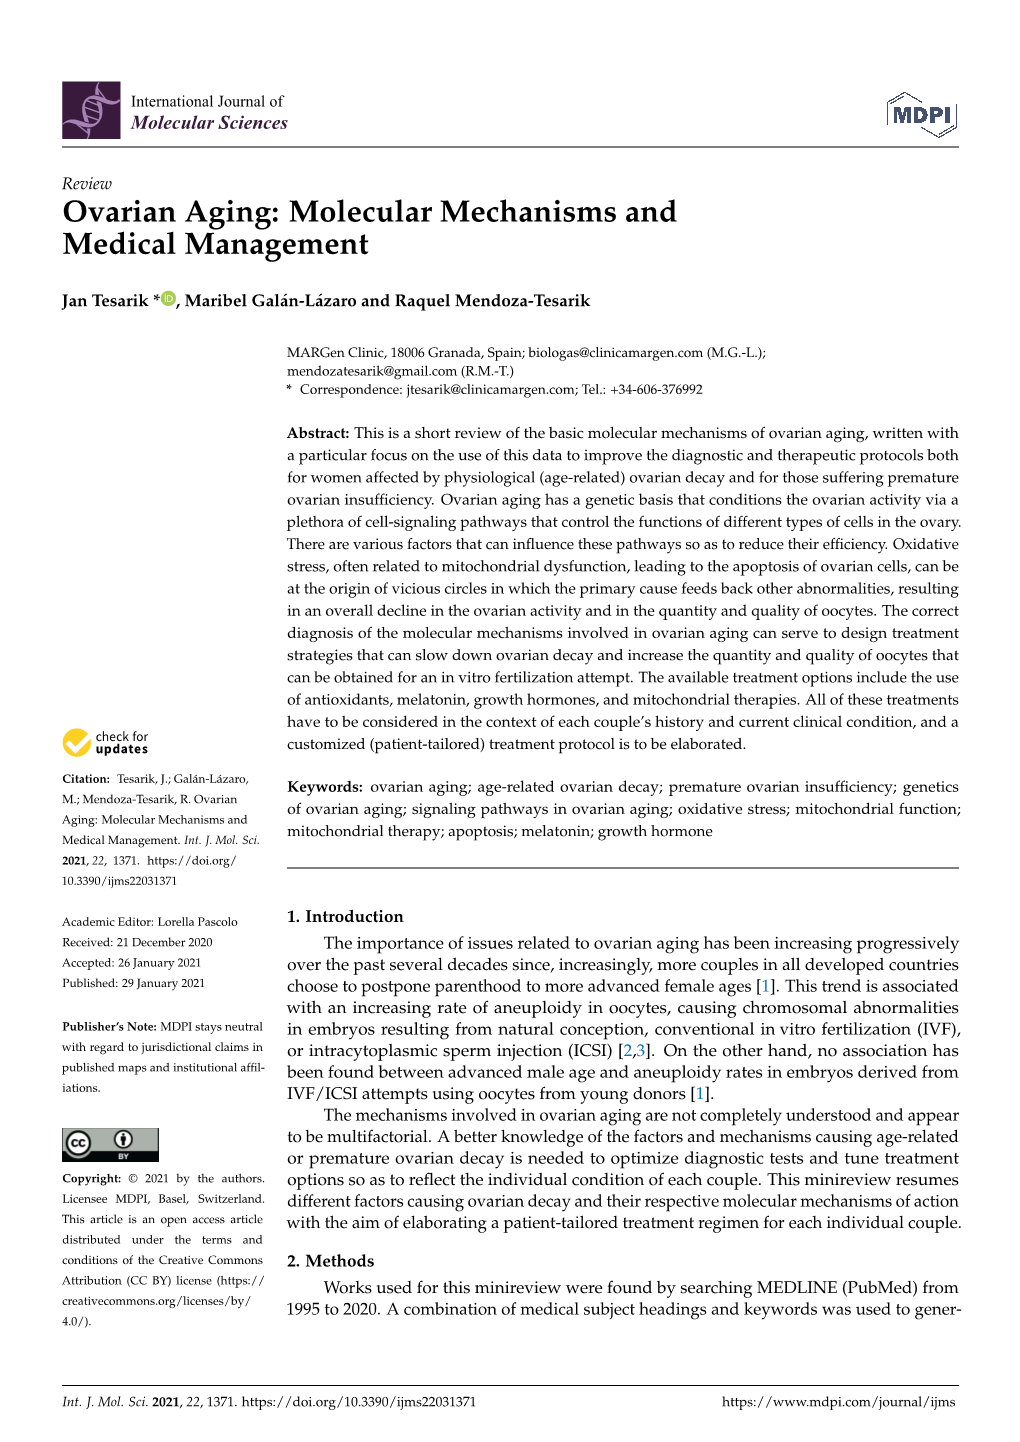 Ovarian Aging: Molecular Mechanisms and Medical Management